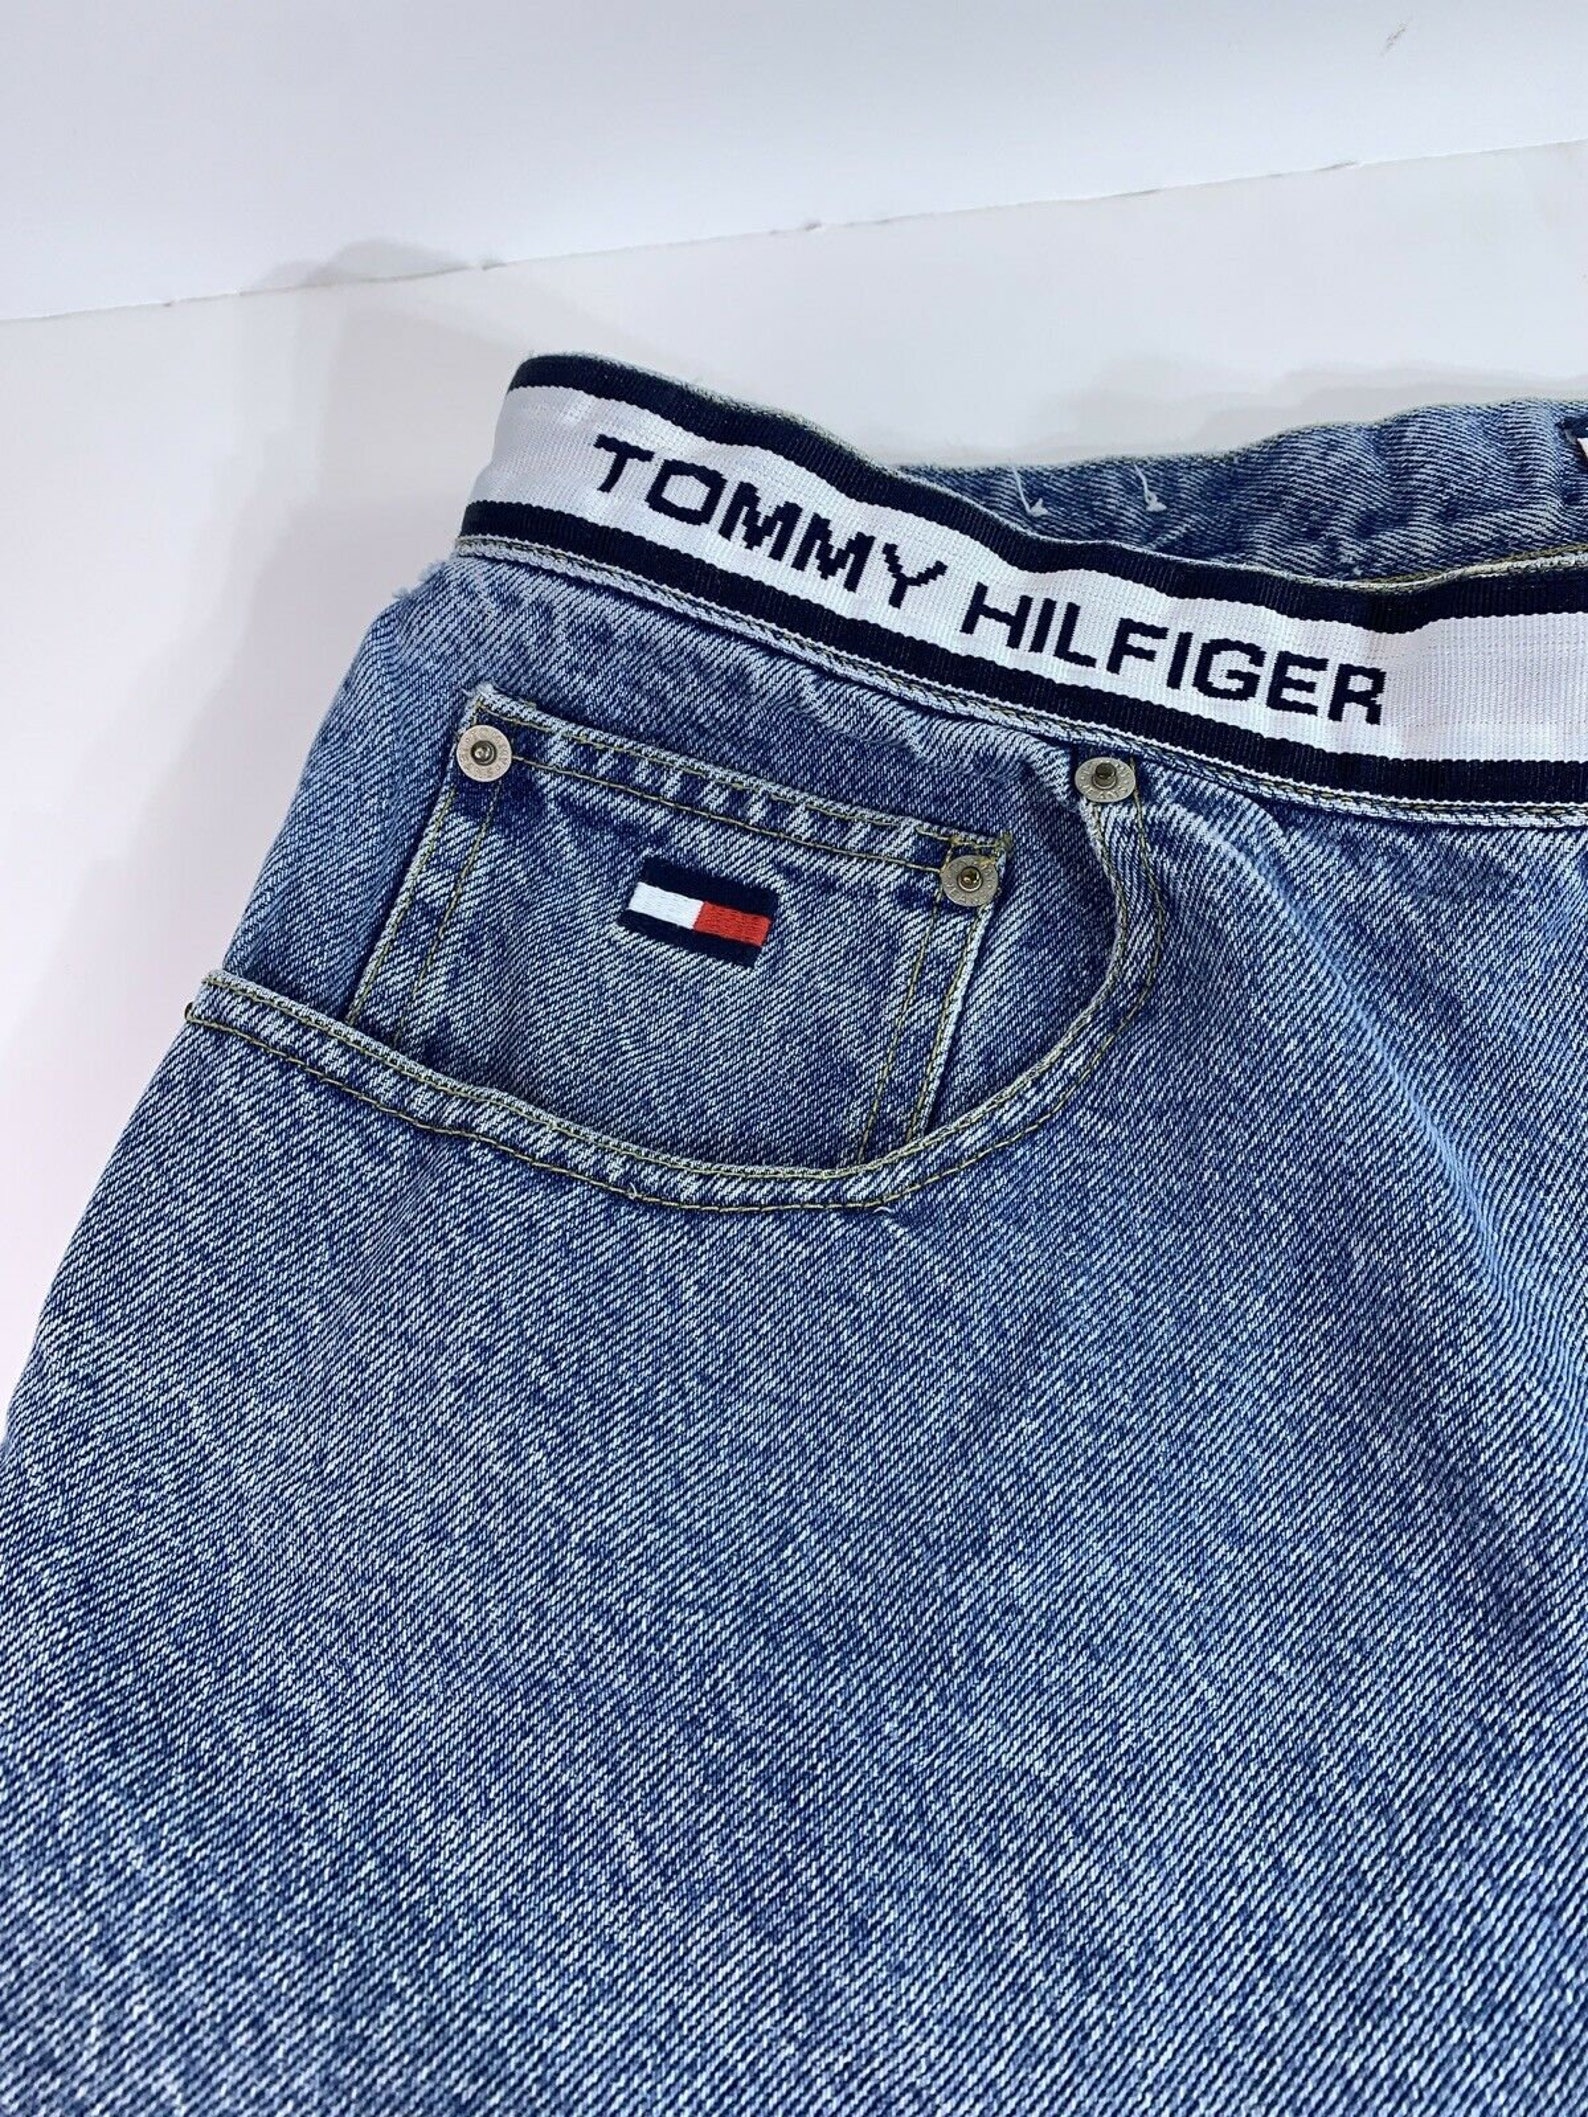 Vintage Tommy Hilfiger Denim Jorts Shorts Spell Out Waist Band | Etsy